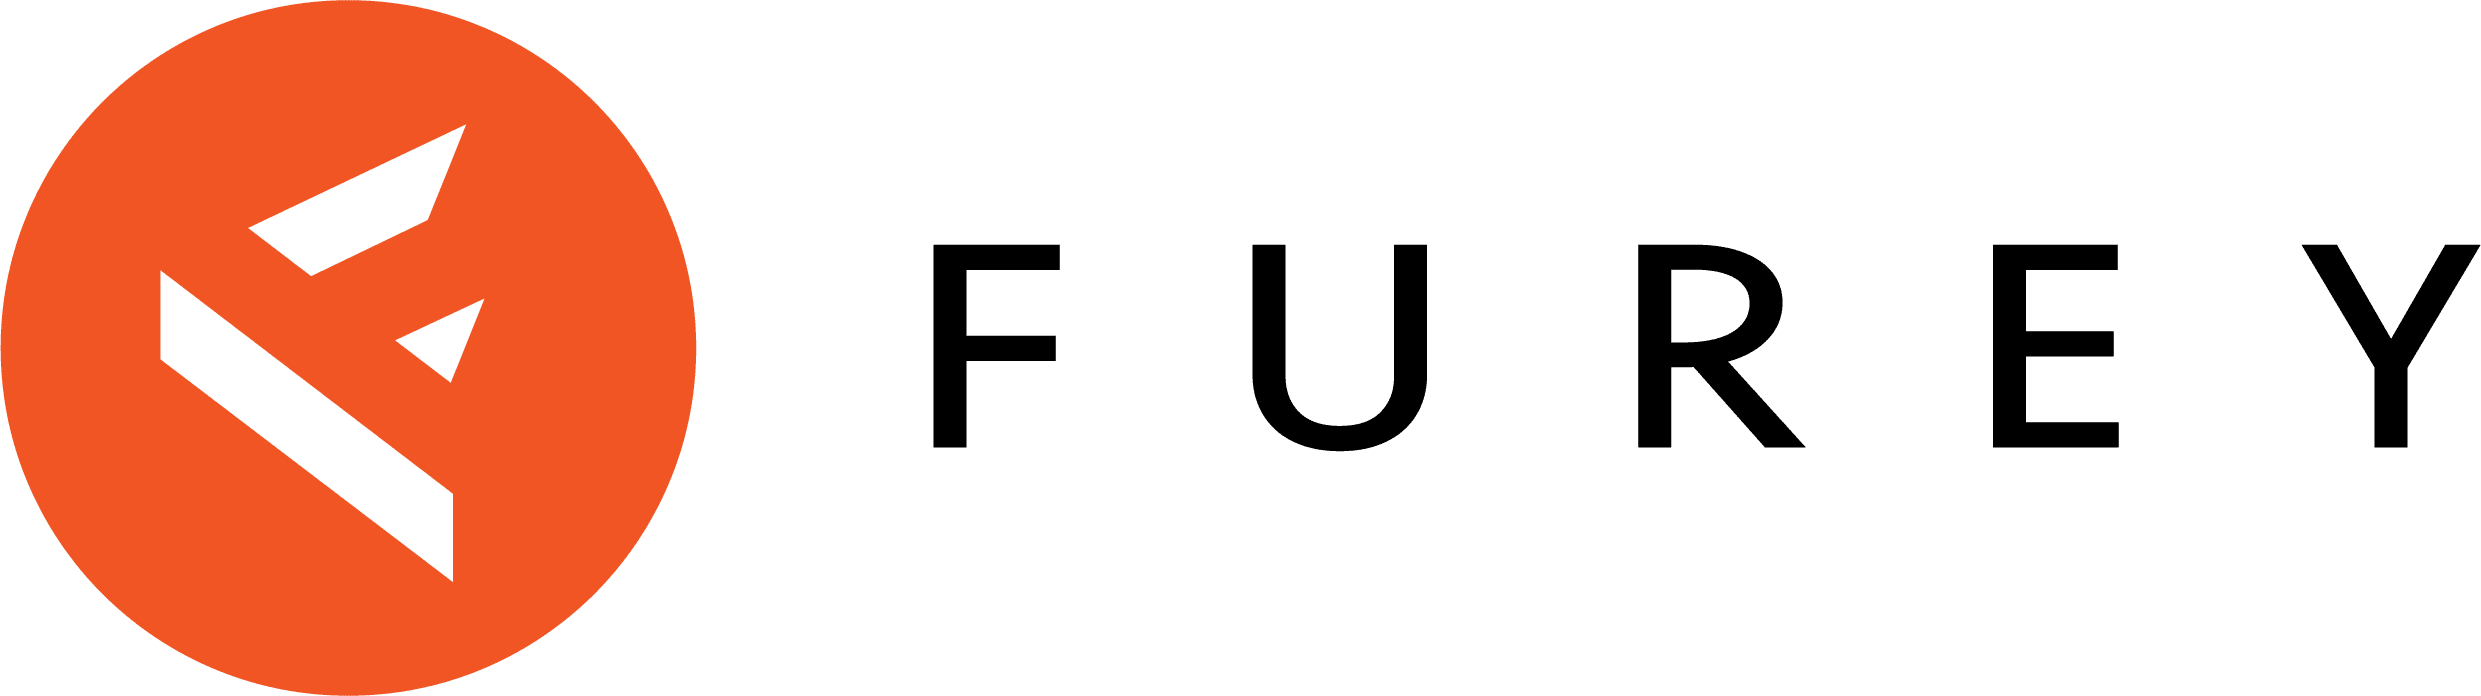 Furey_Logo_Billcom-case-study